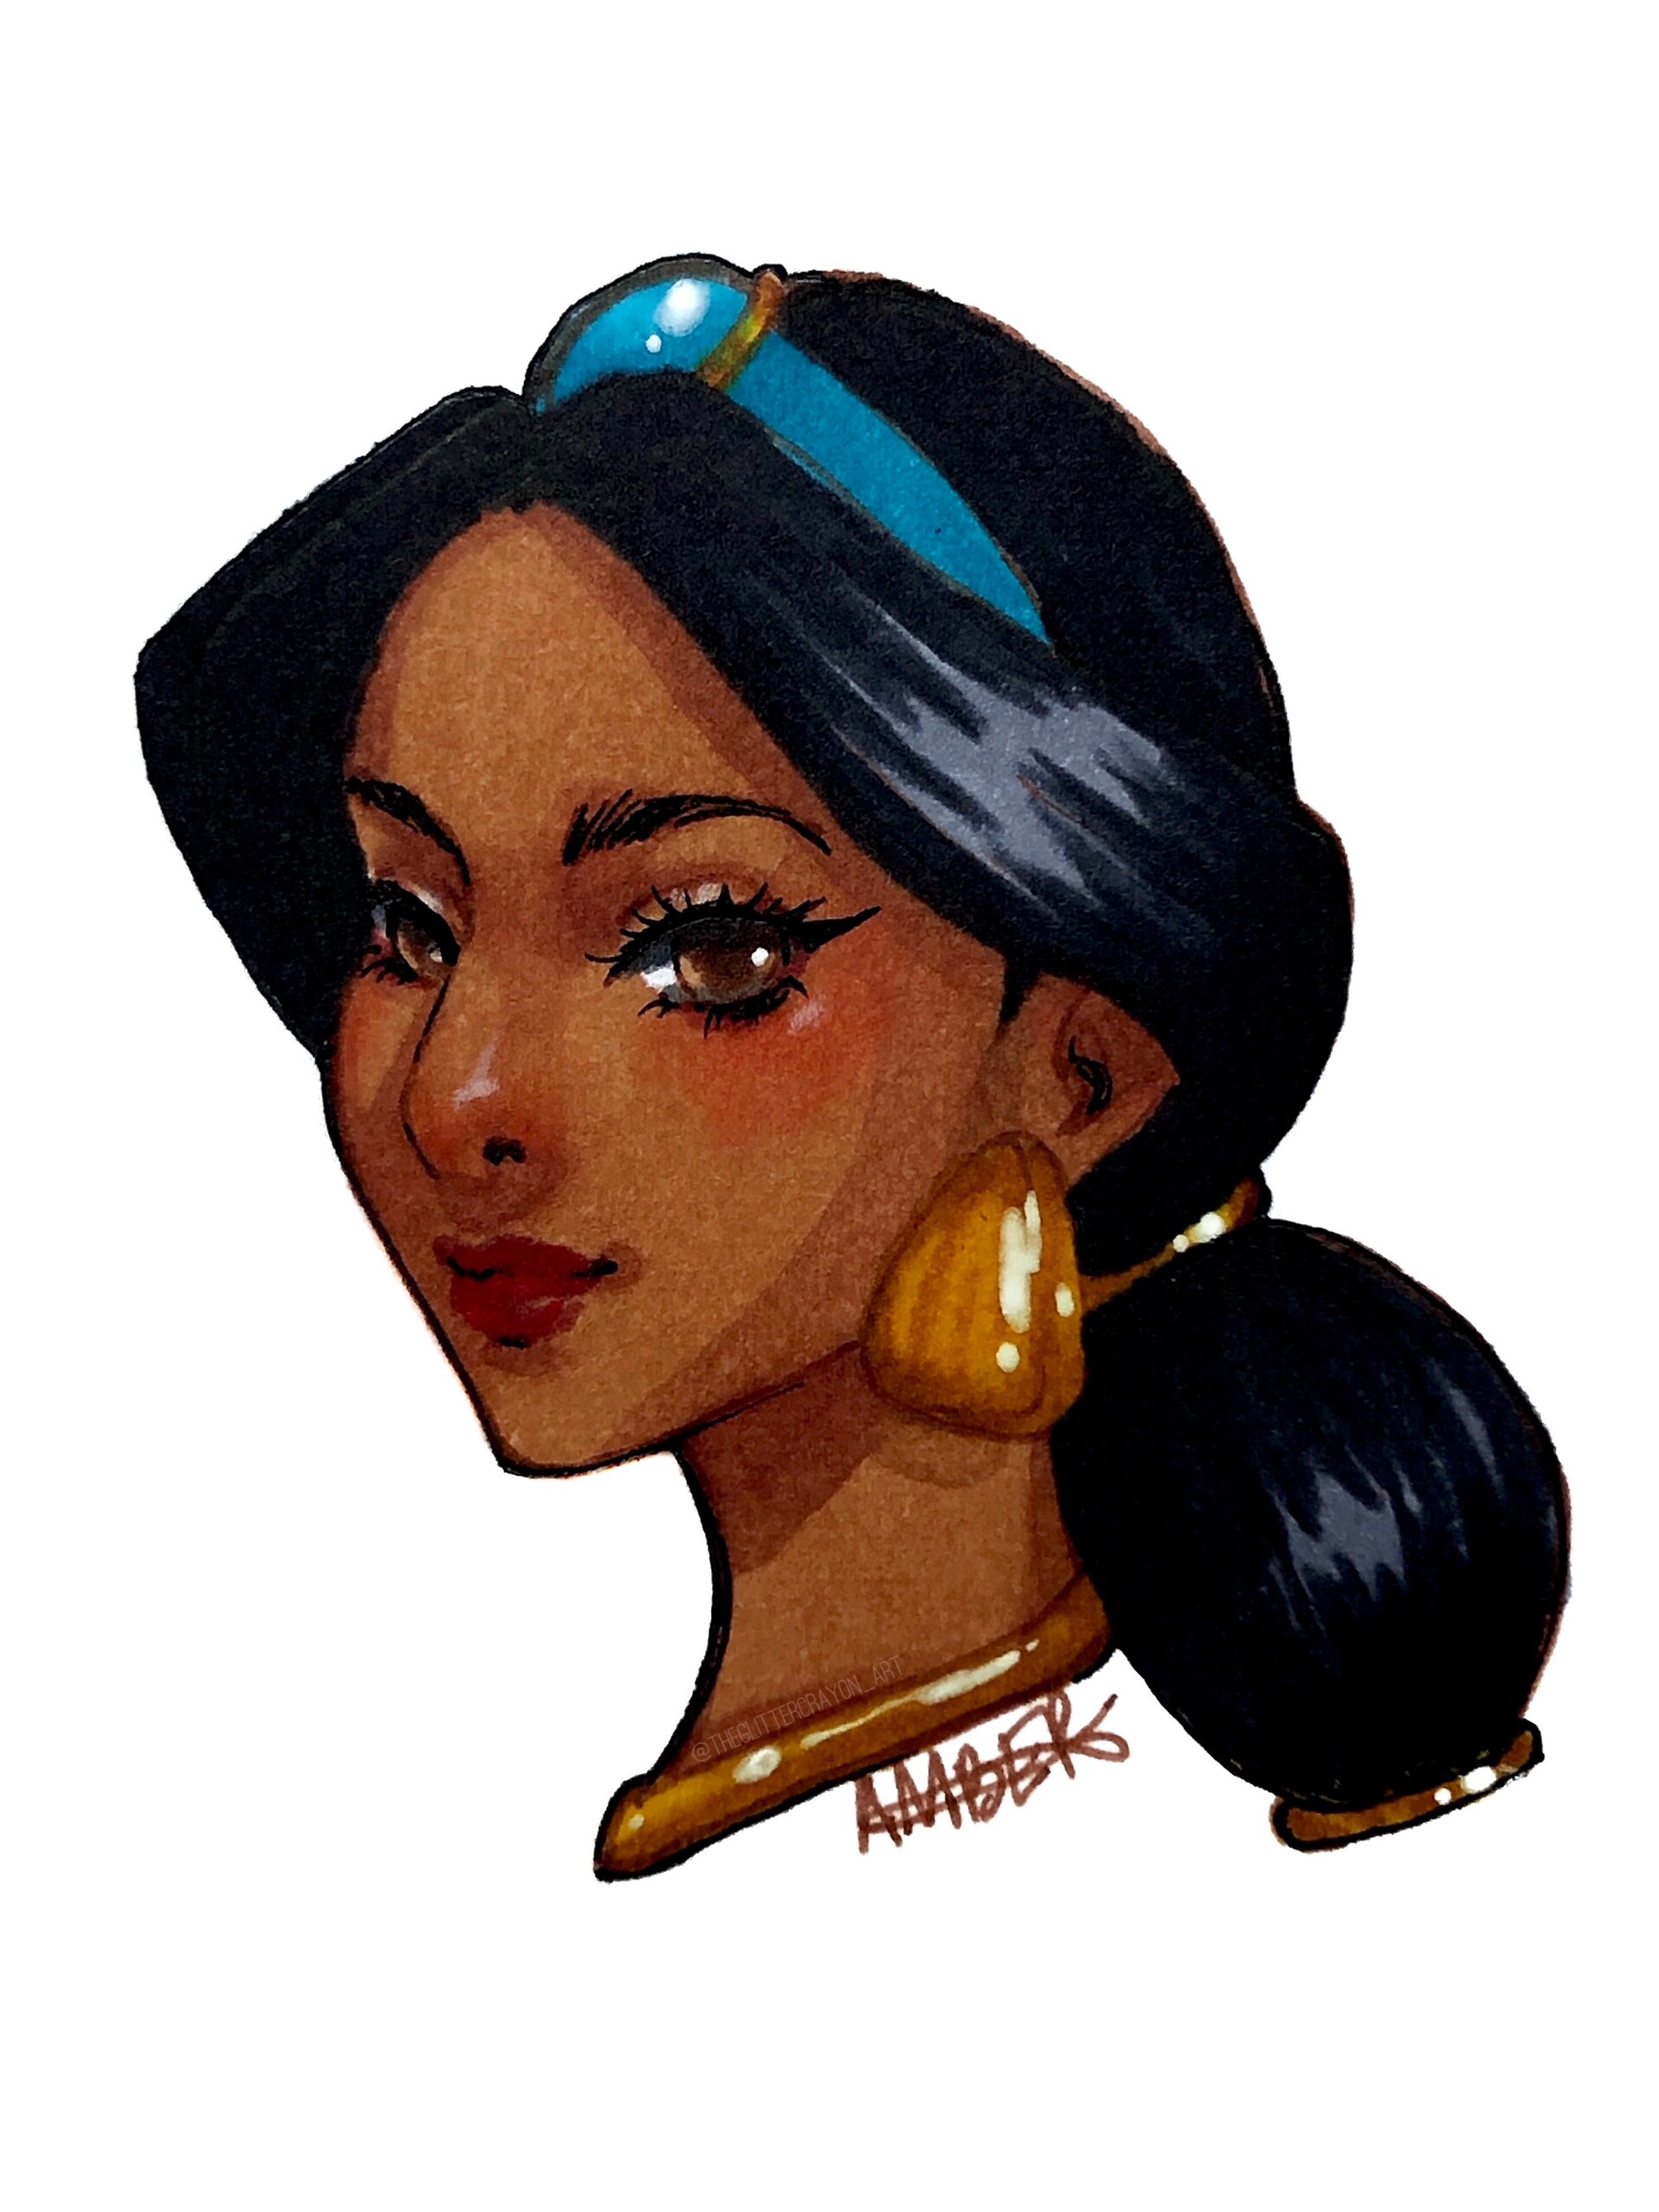 princess jasmine sketch